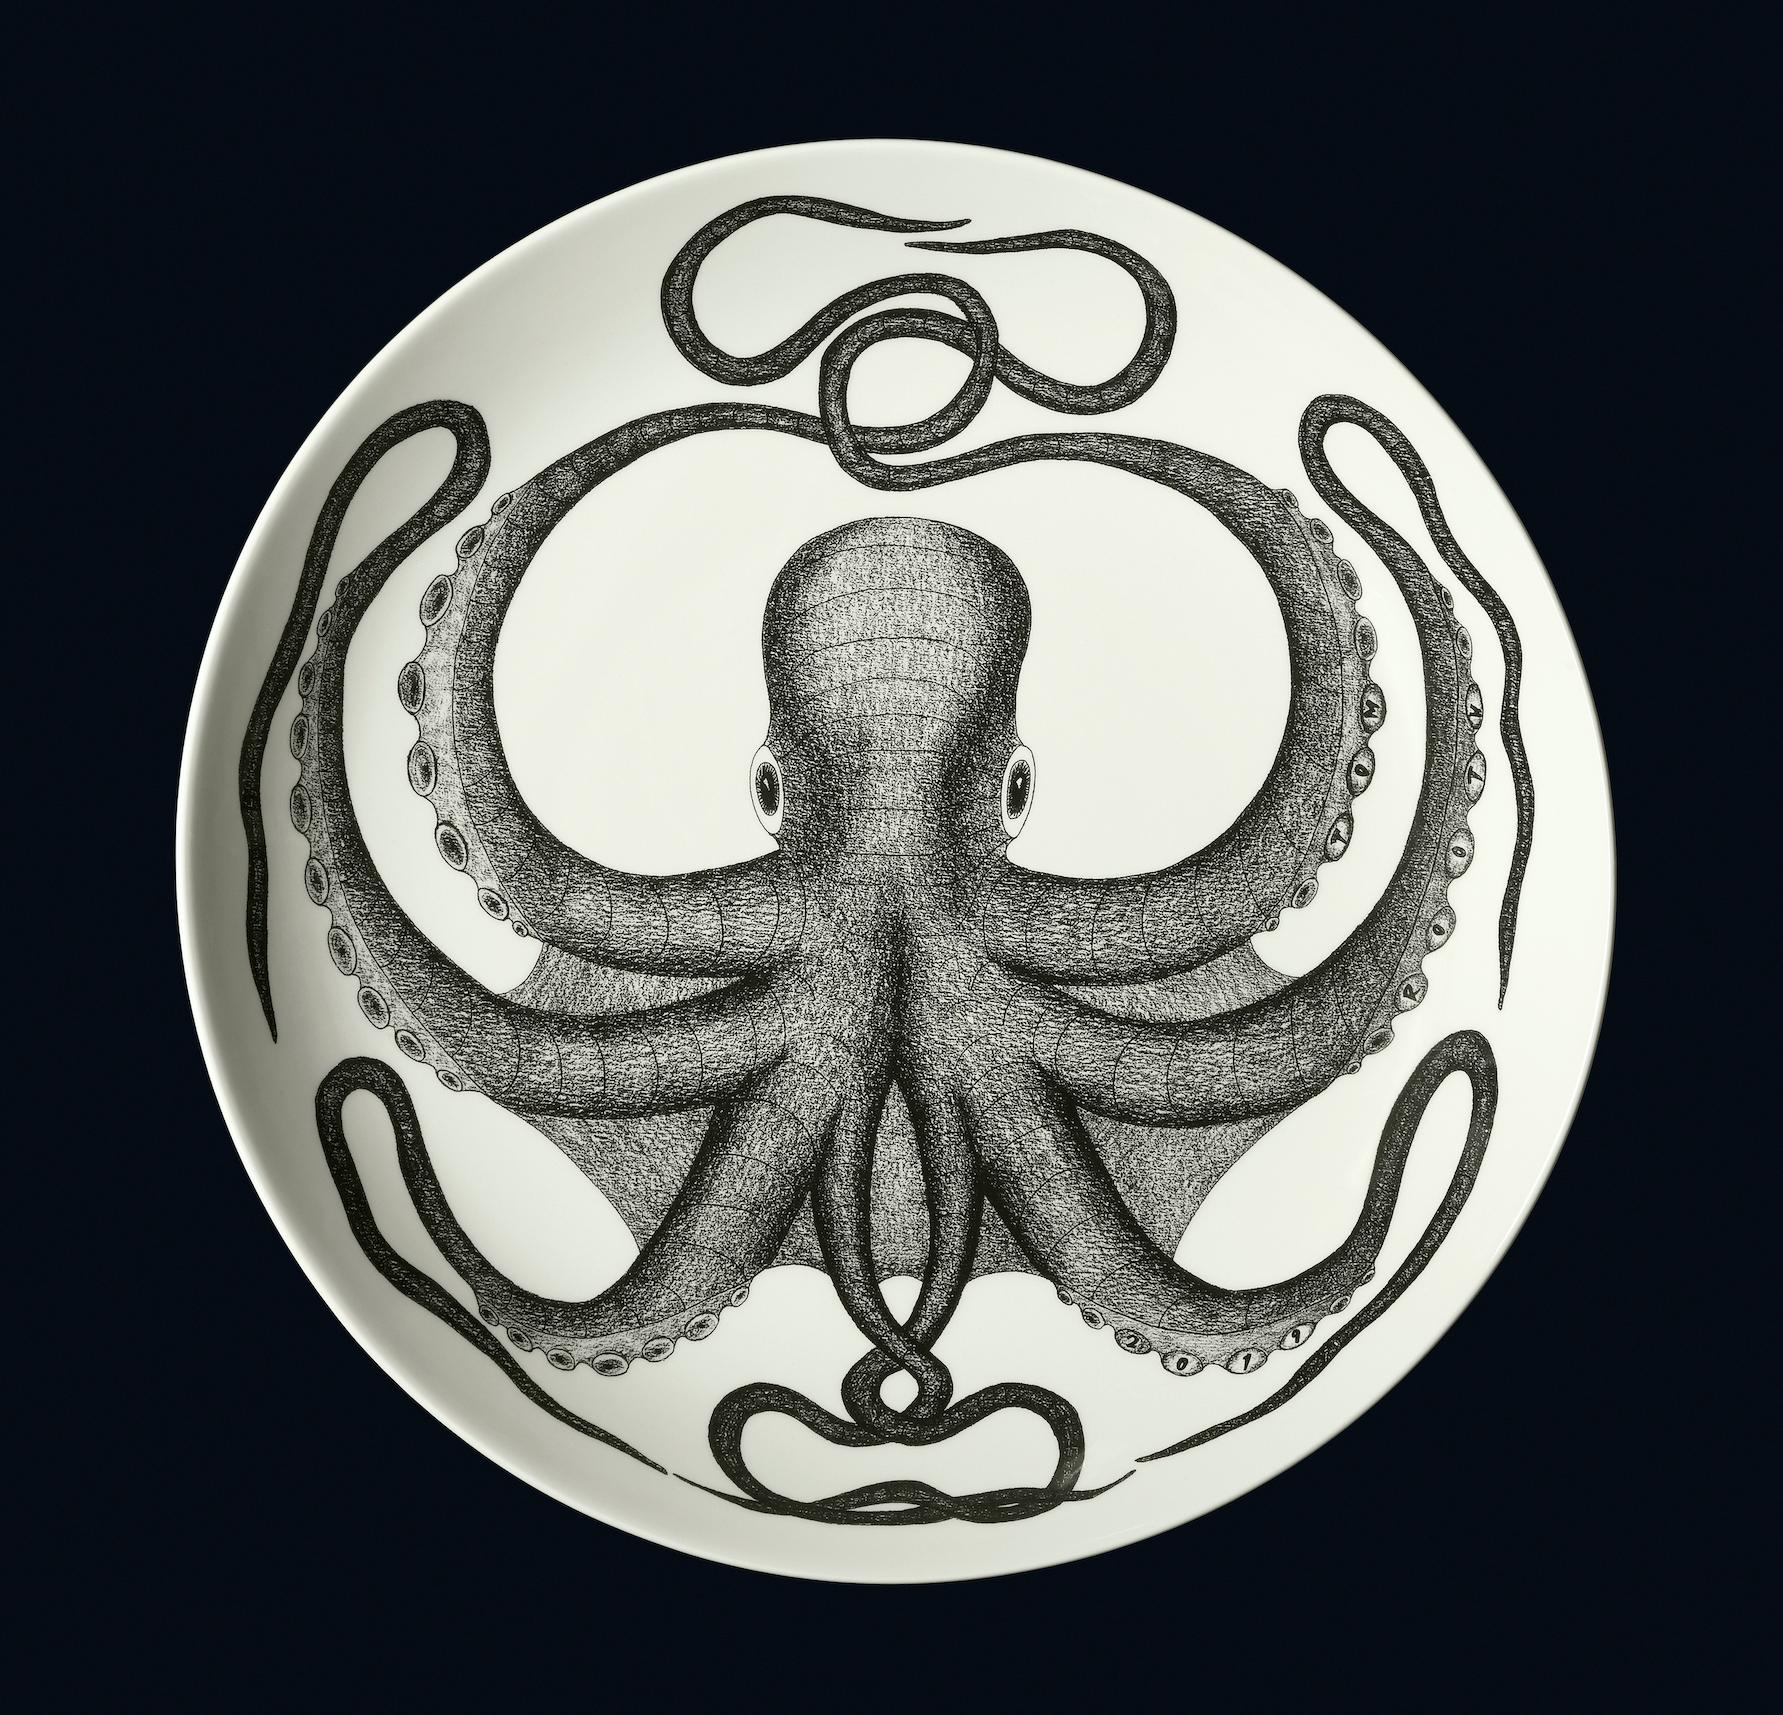 Octoplate